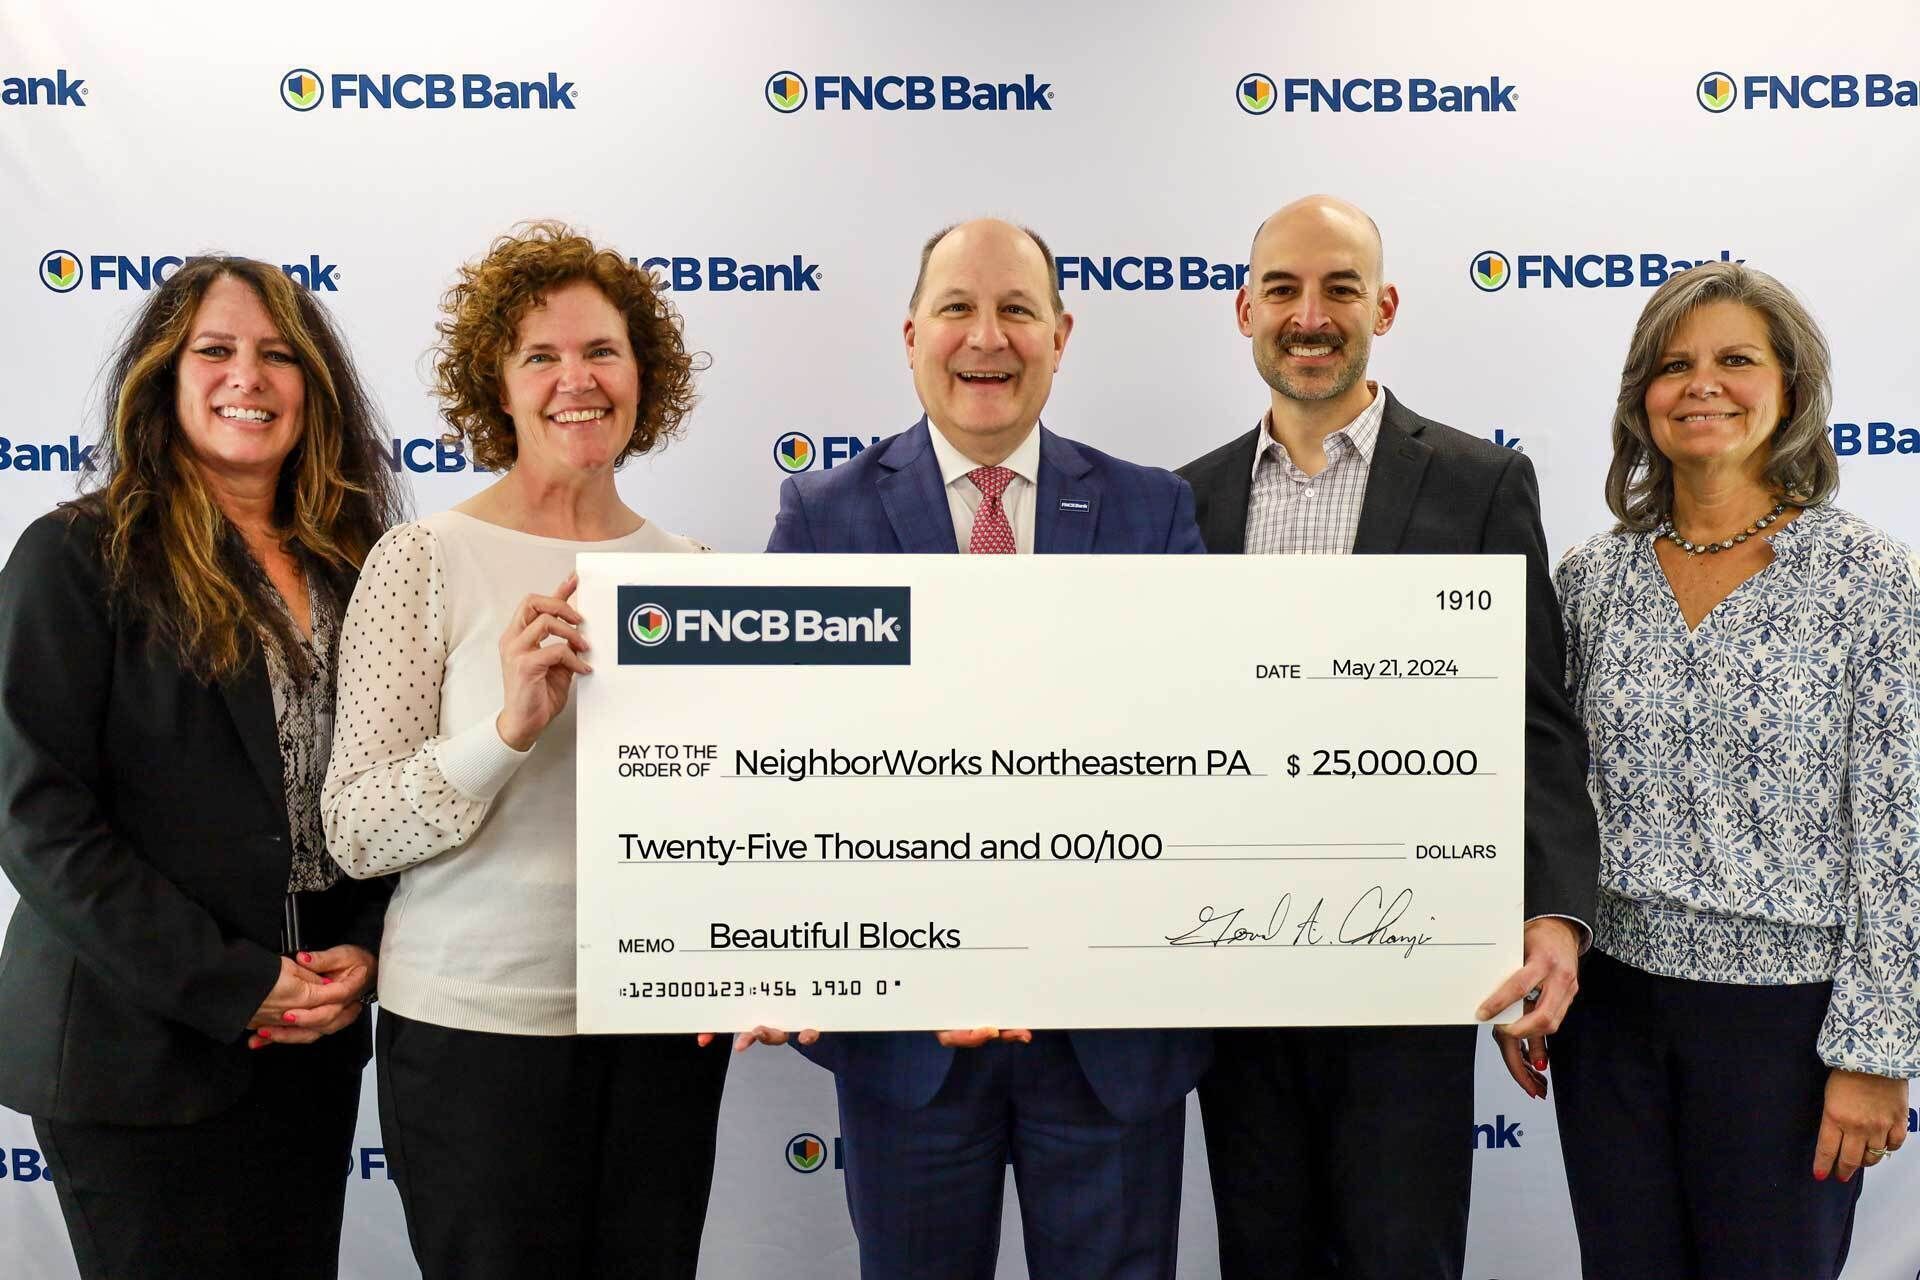 NeighborWorks receives contribution from FNCB Bank through Neighborhood Assistance Program